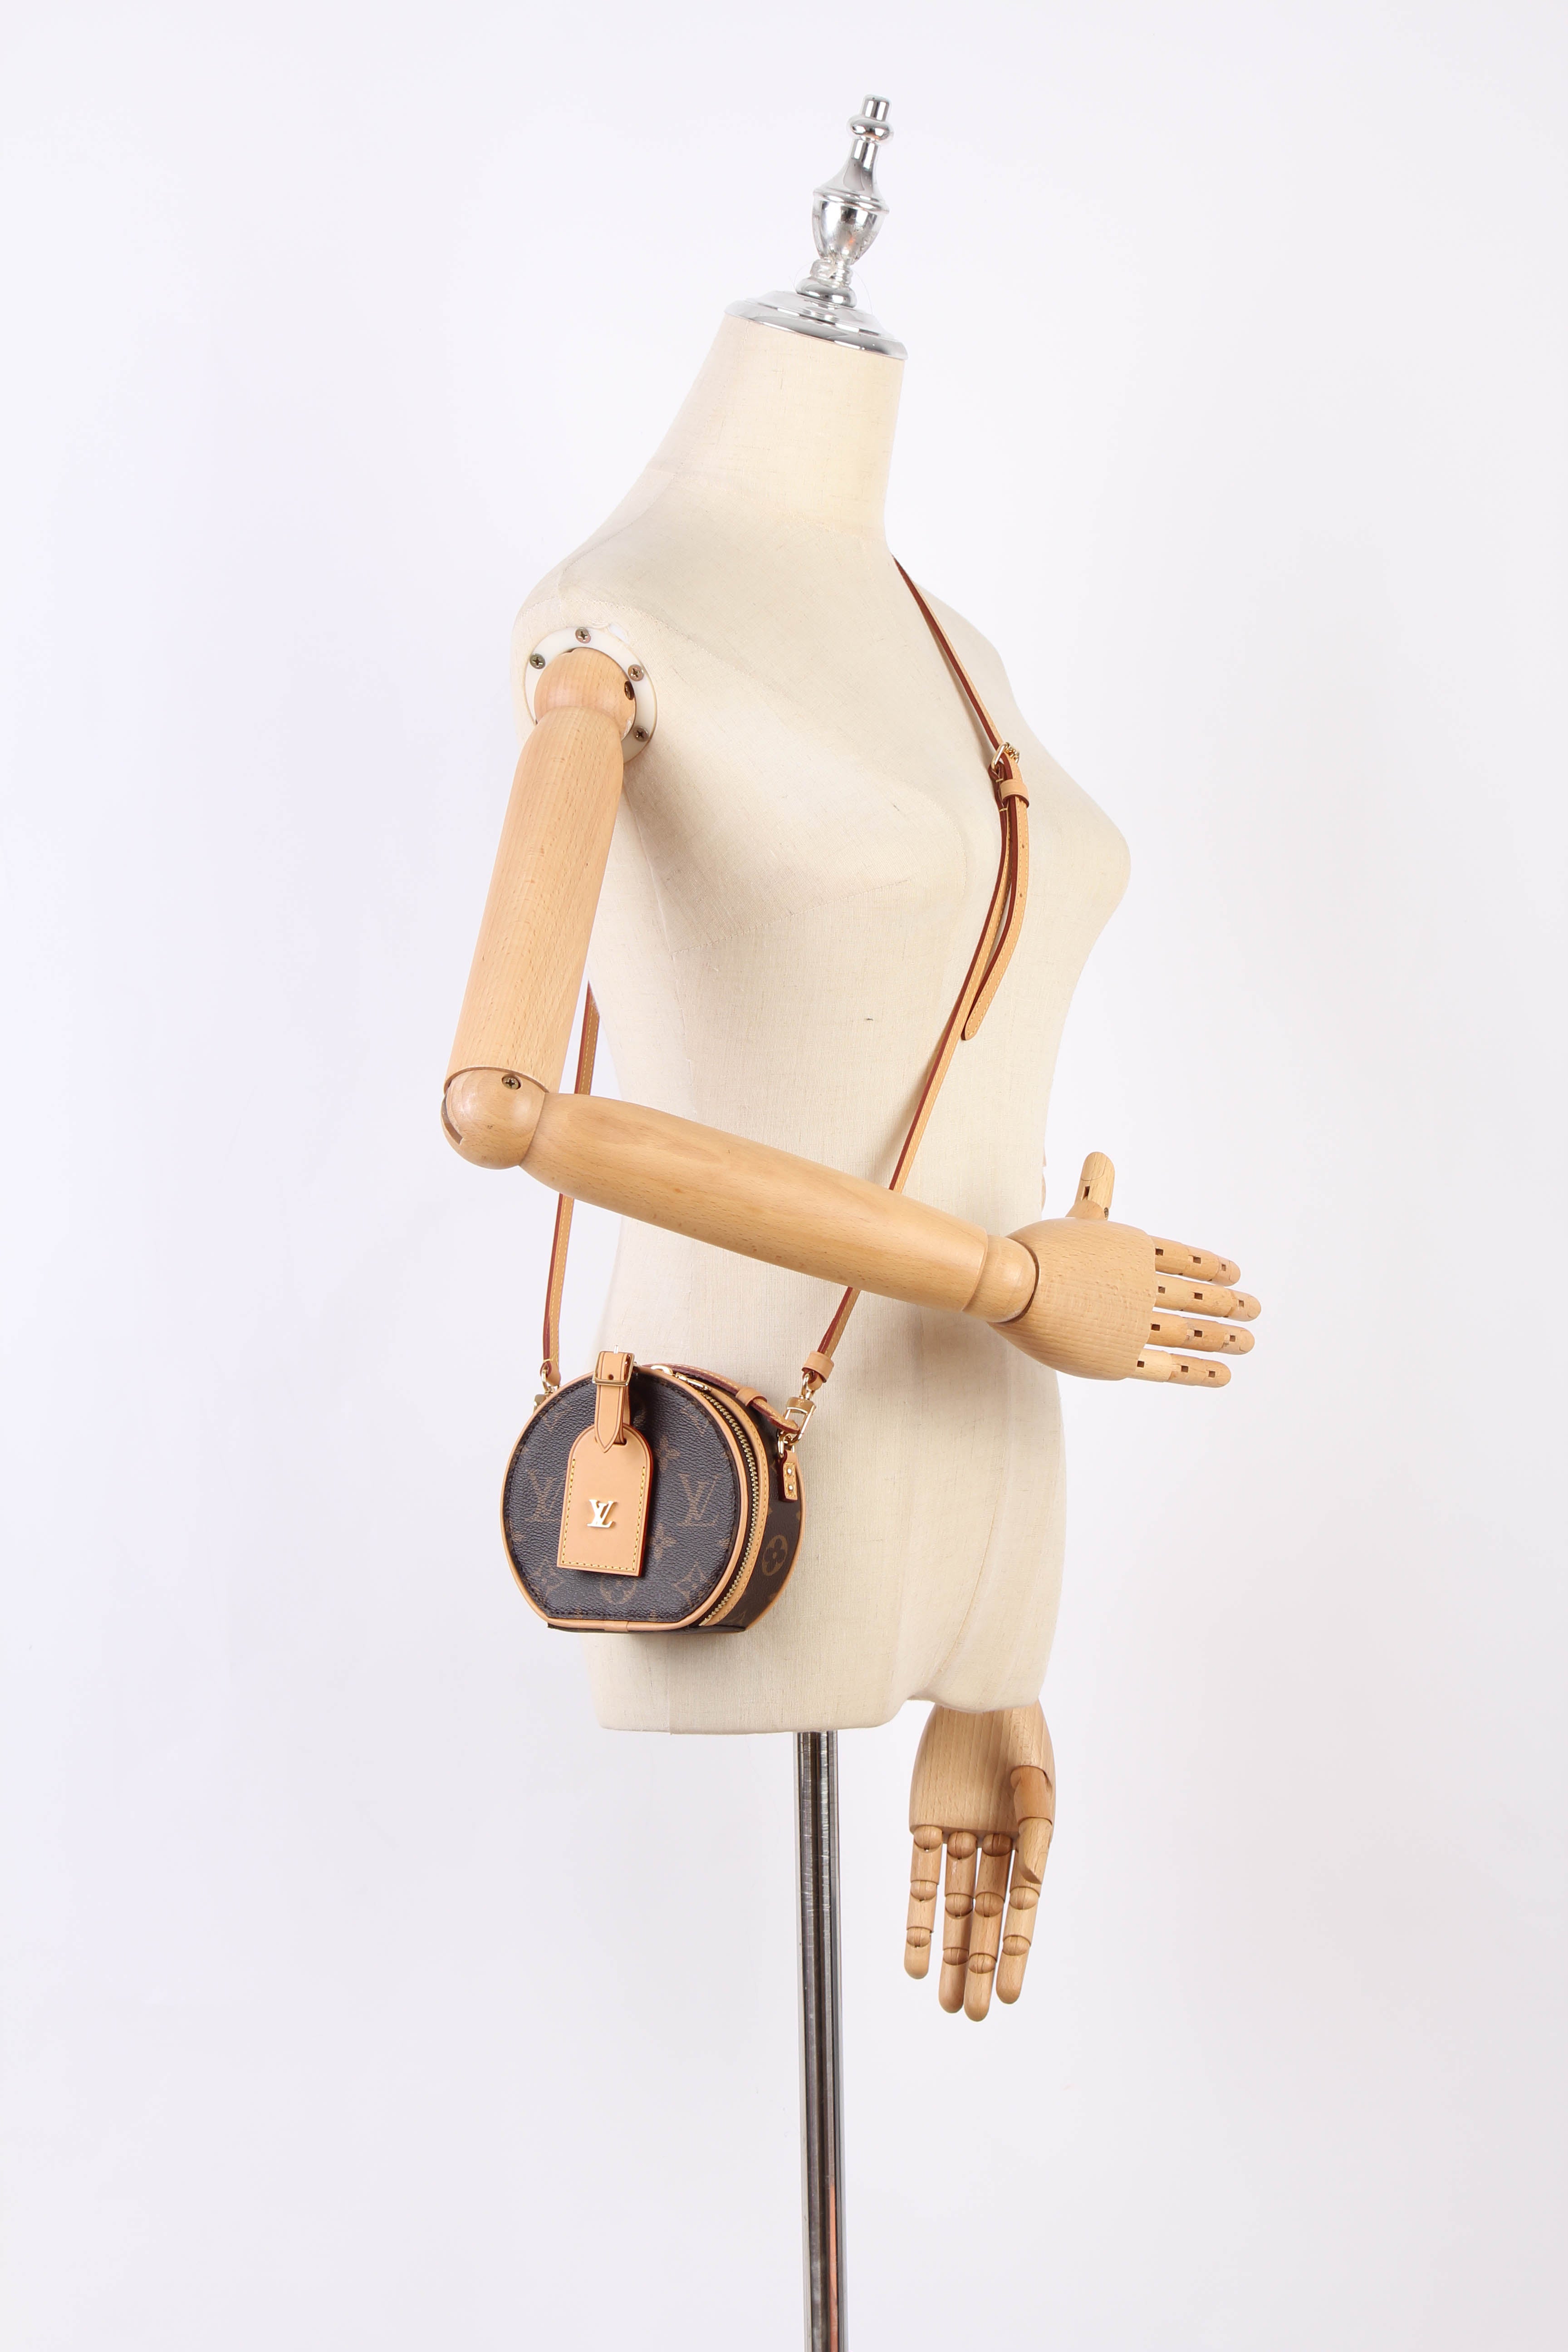 Monogram Mini Boite Chapeau Round Case Top Handle Bag M44699 2019